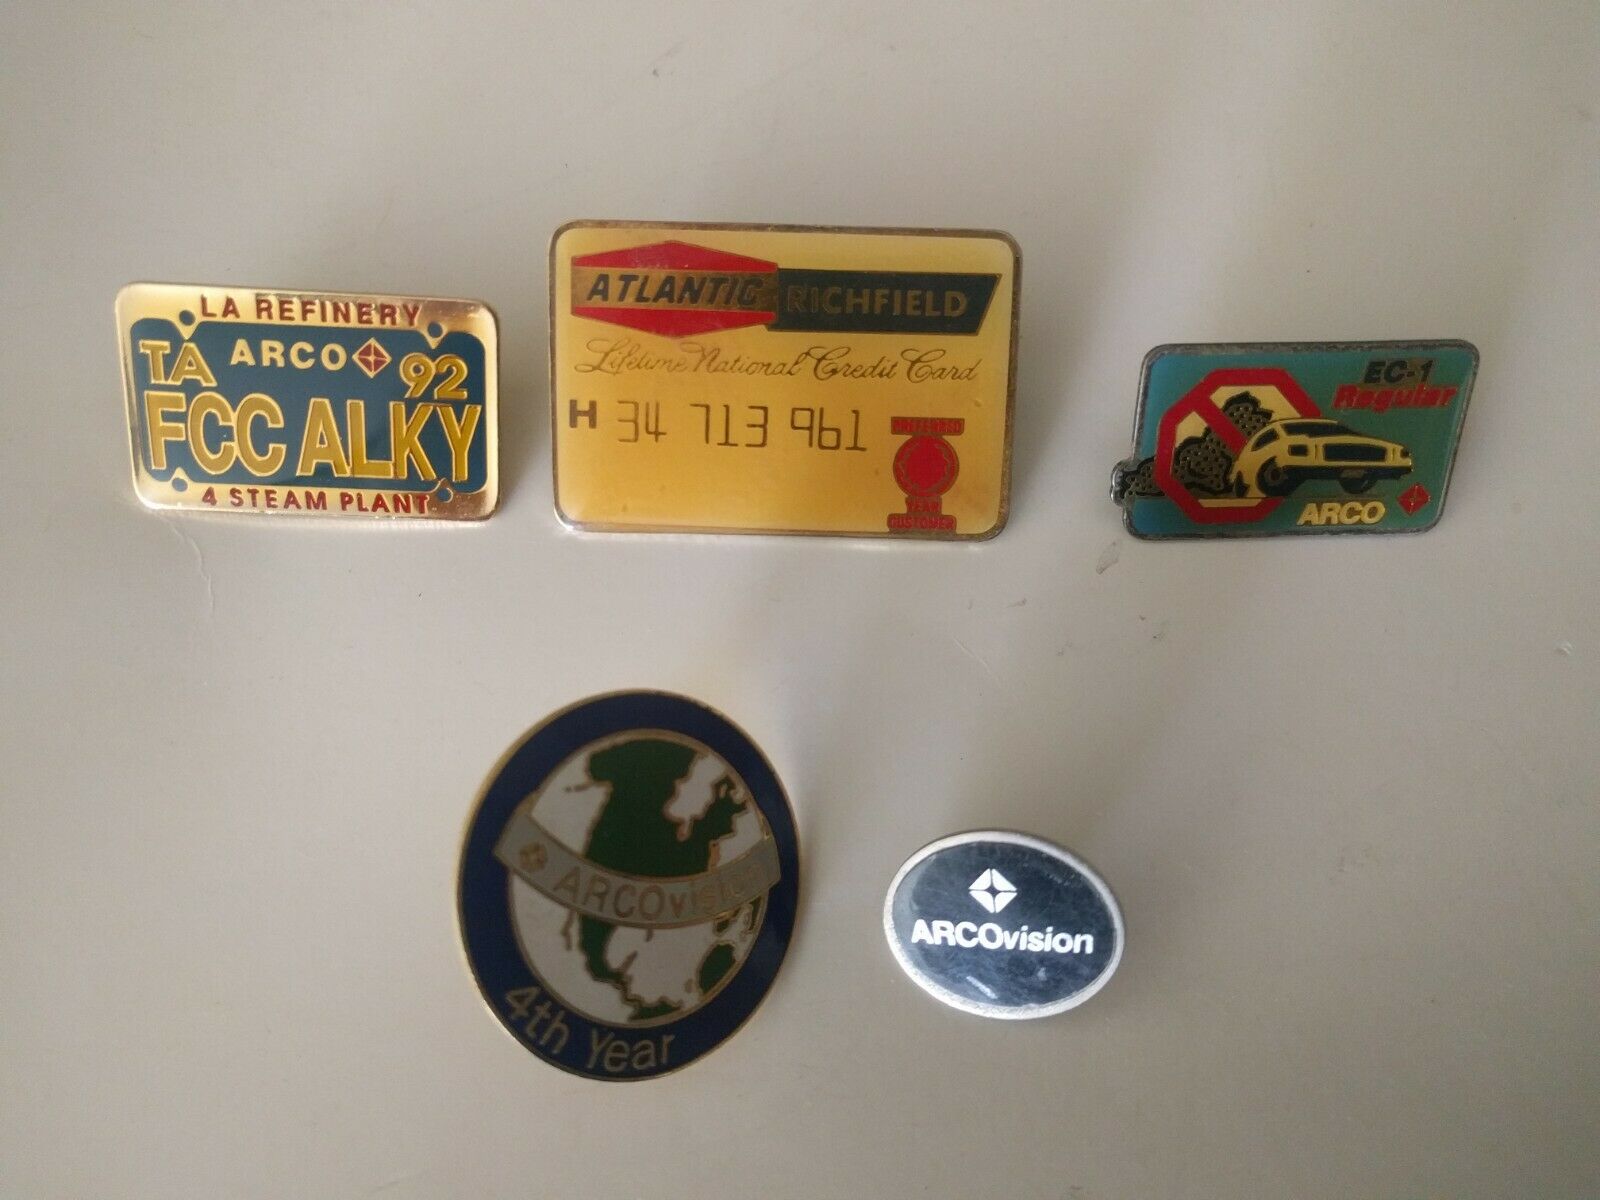 Rare Atlantic Richfield Arco Employee Pins Credit Card License Plate Oil Vision